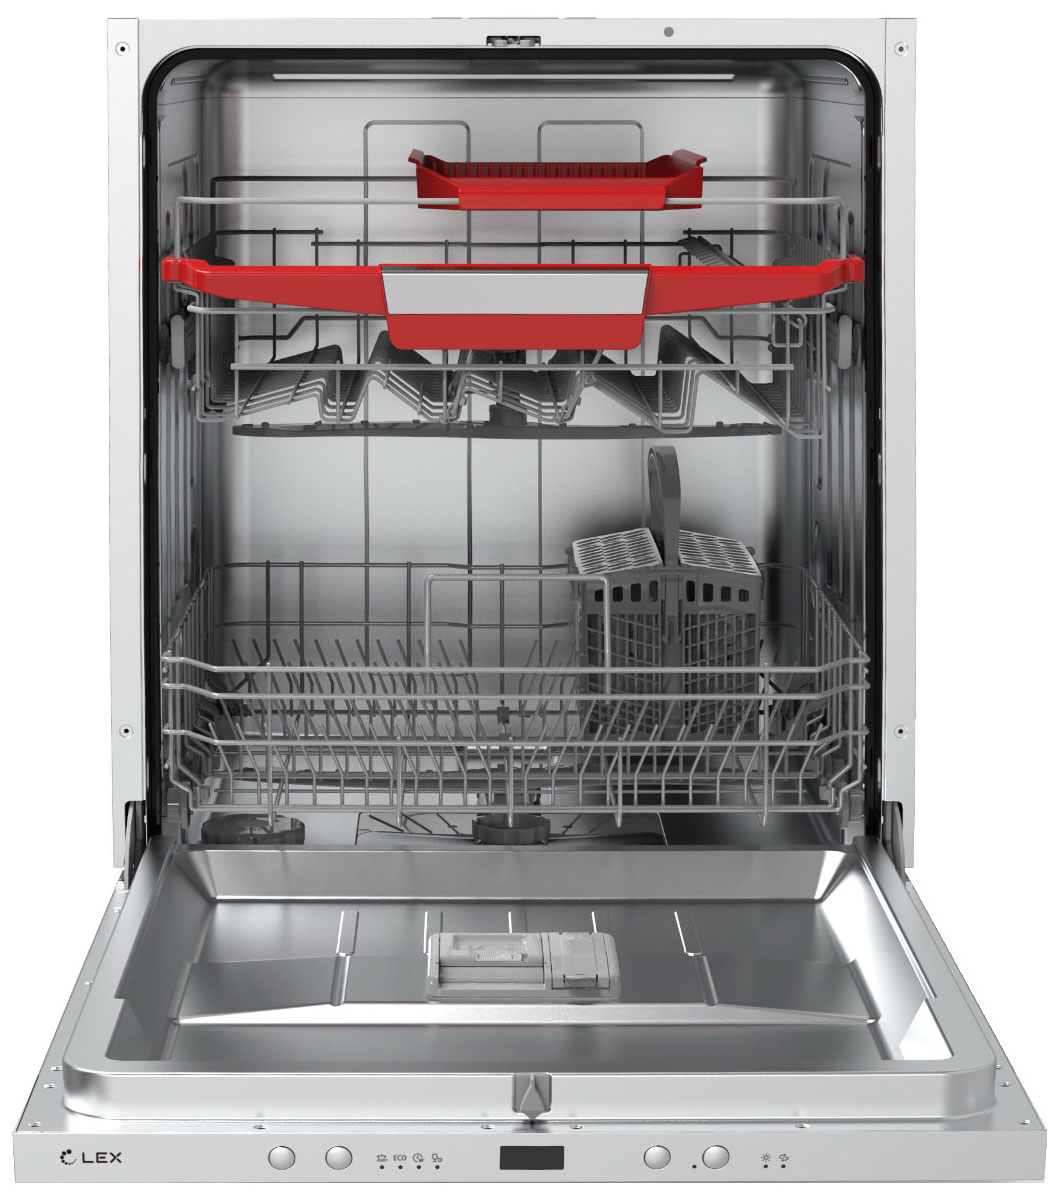 Встраиваемая посудомоечная машина LEX PM 6043 B посудомоечная машина встраиваемая lex pm 6062 b 60 см chmi000302